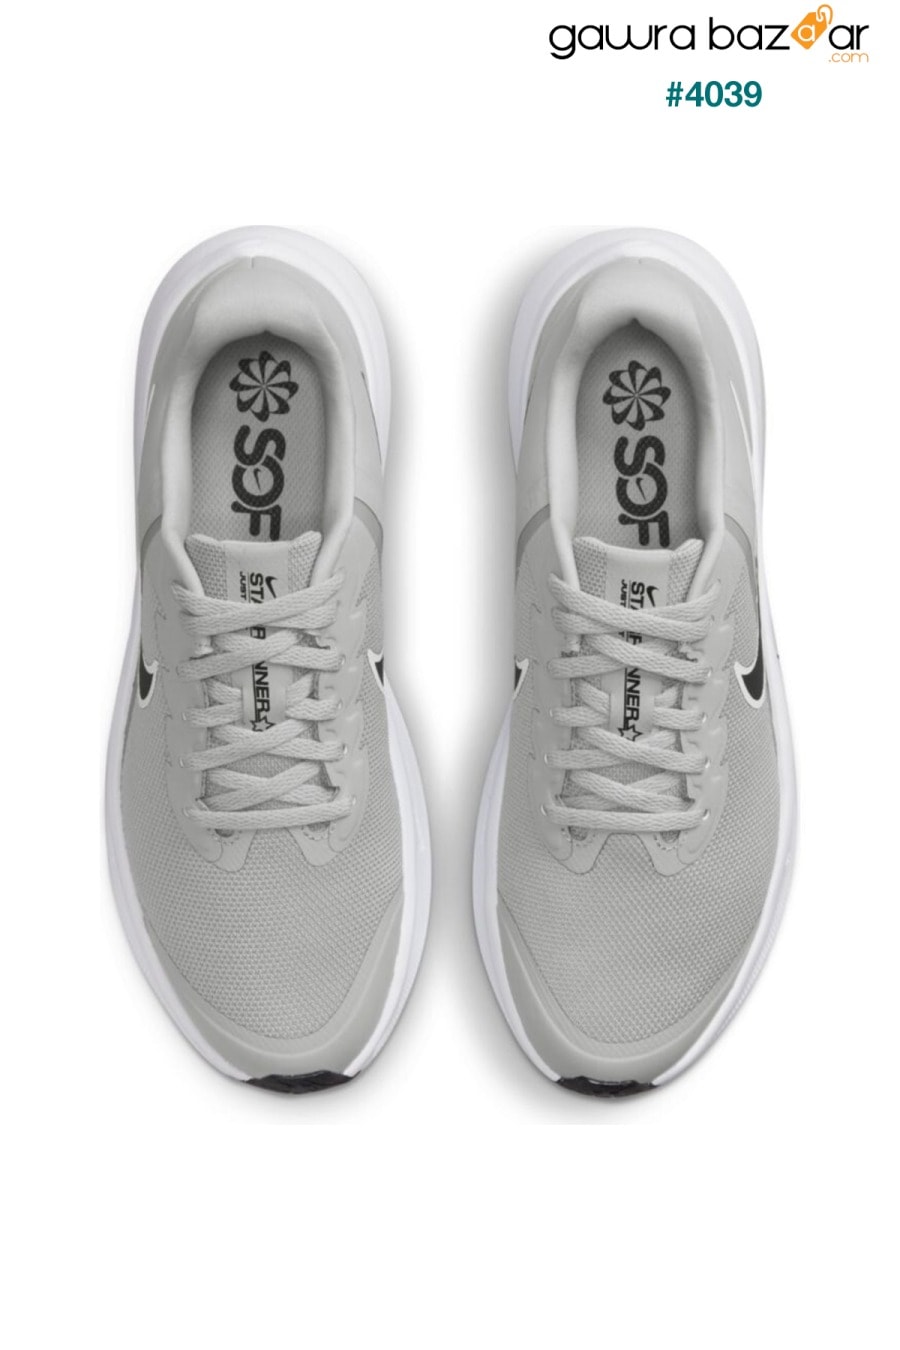 حذاء ستار رانر 3 رياضي Nike 3